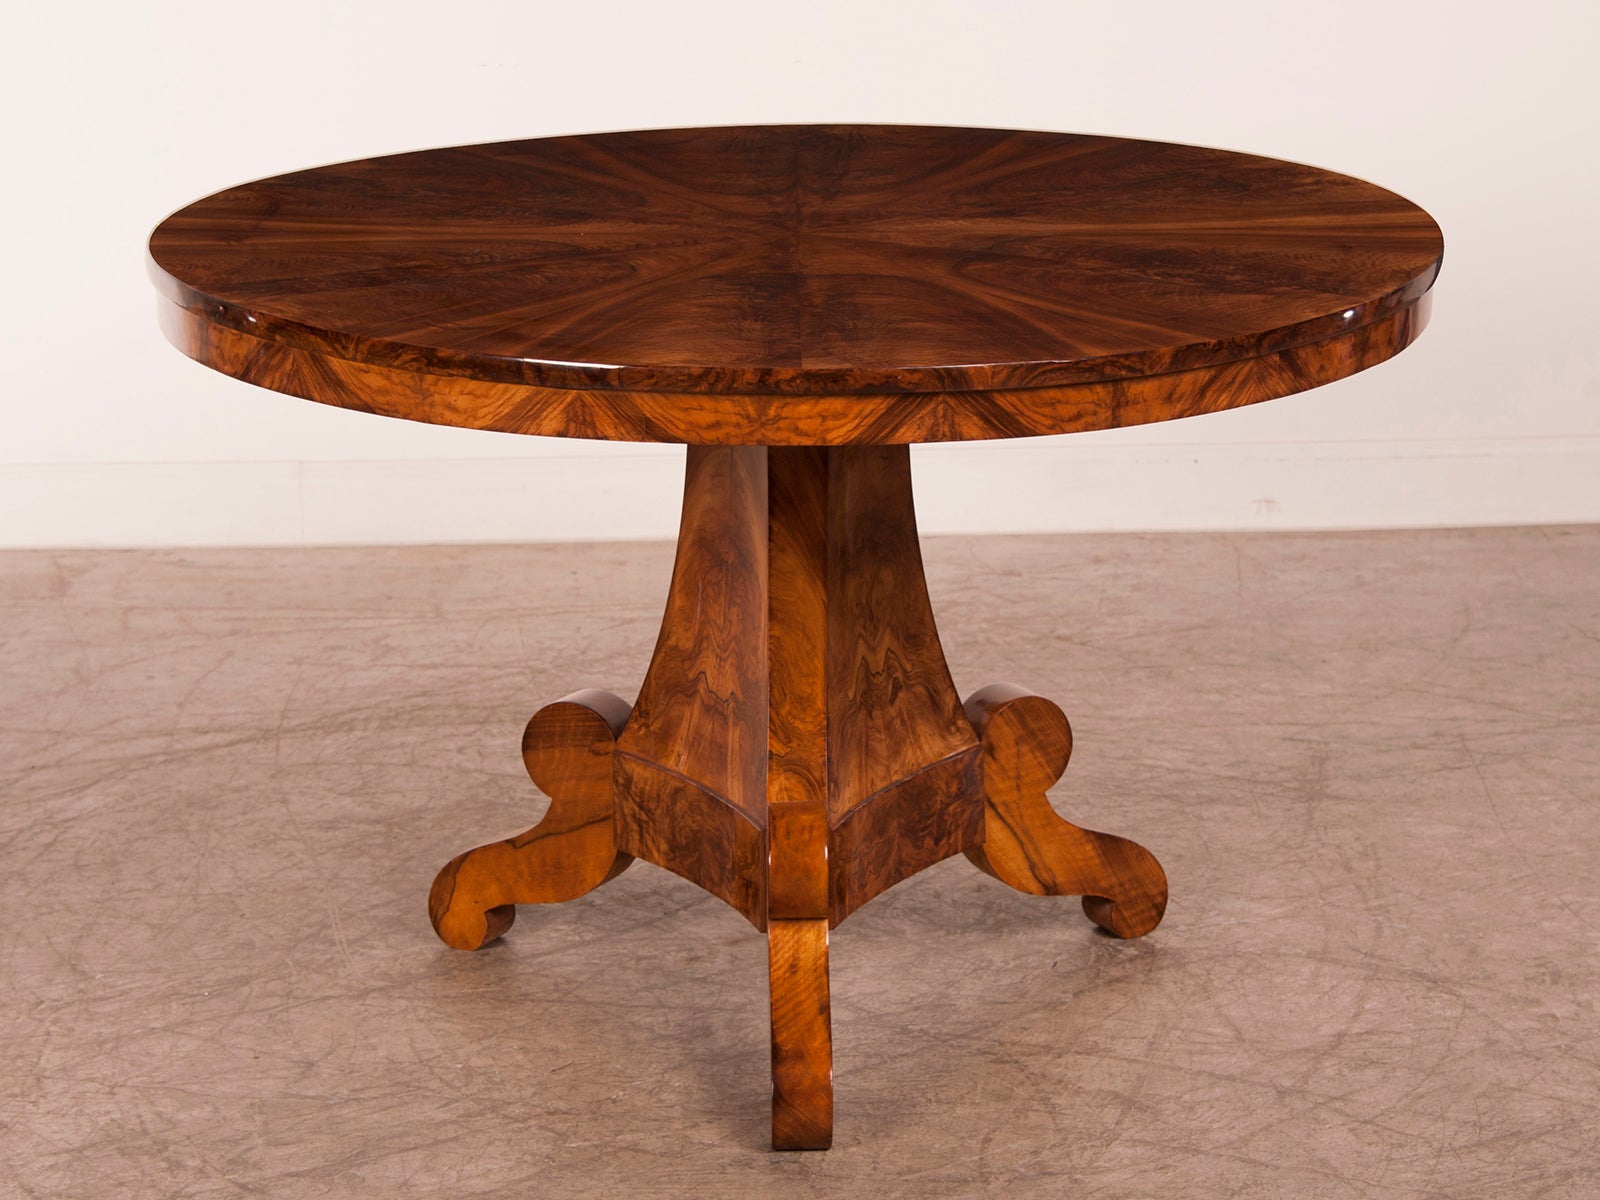 An Impressive Biedermeier Period Walnut Table From Germany C.1830